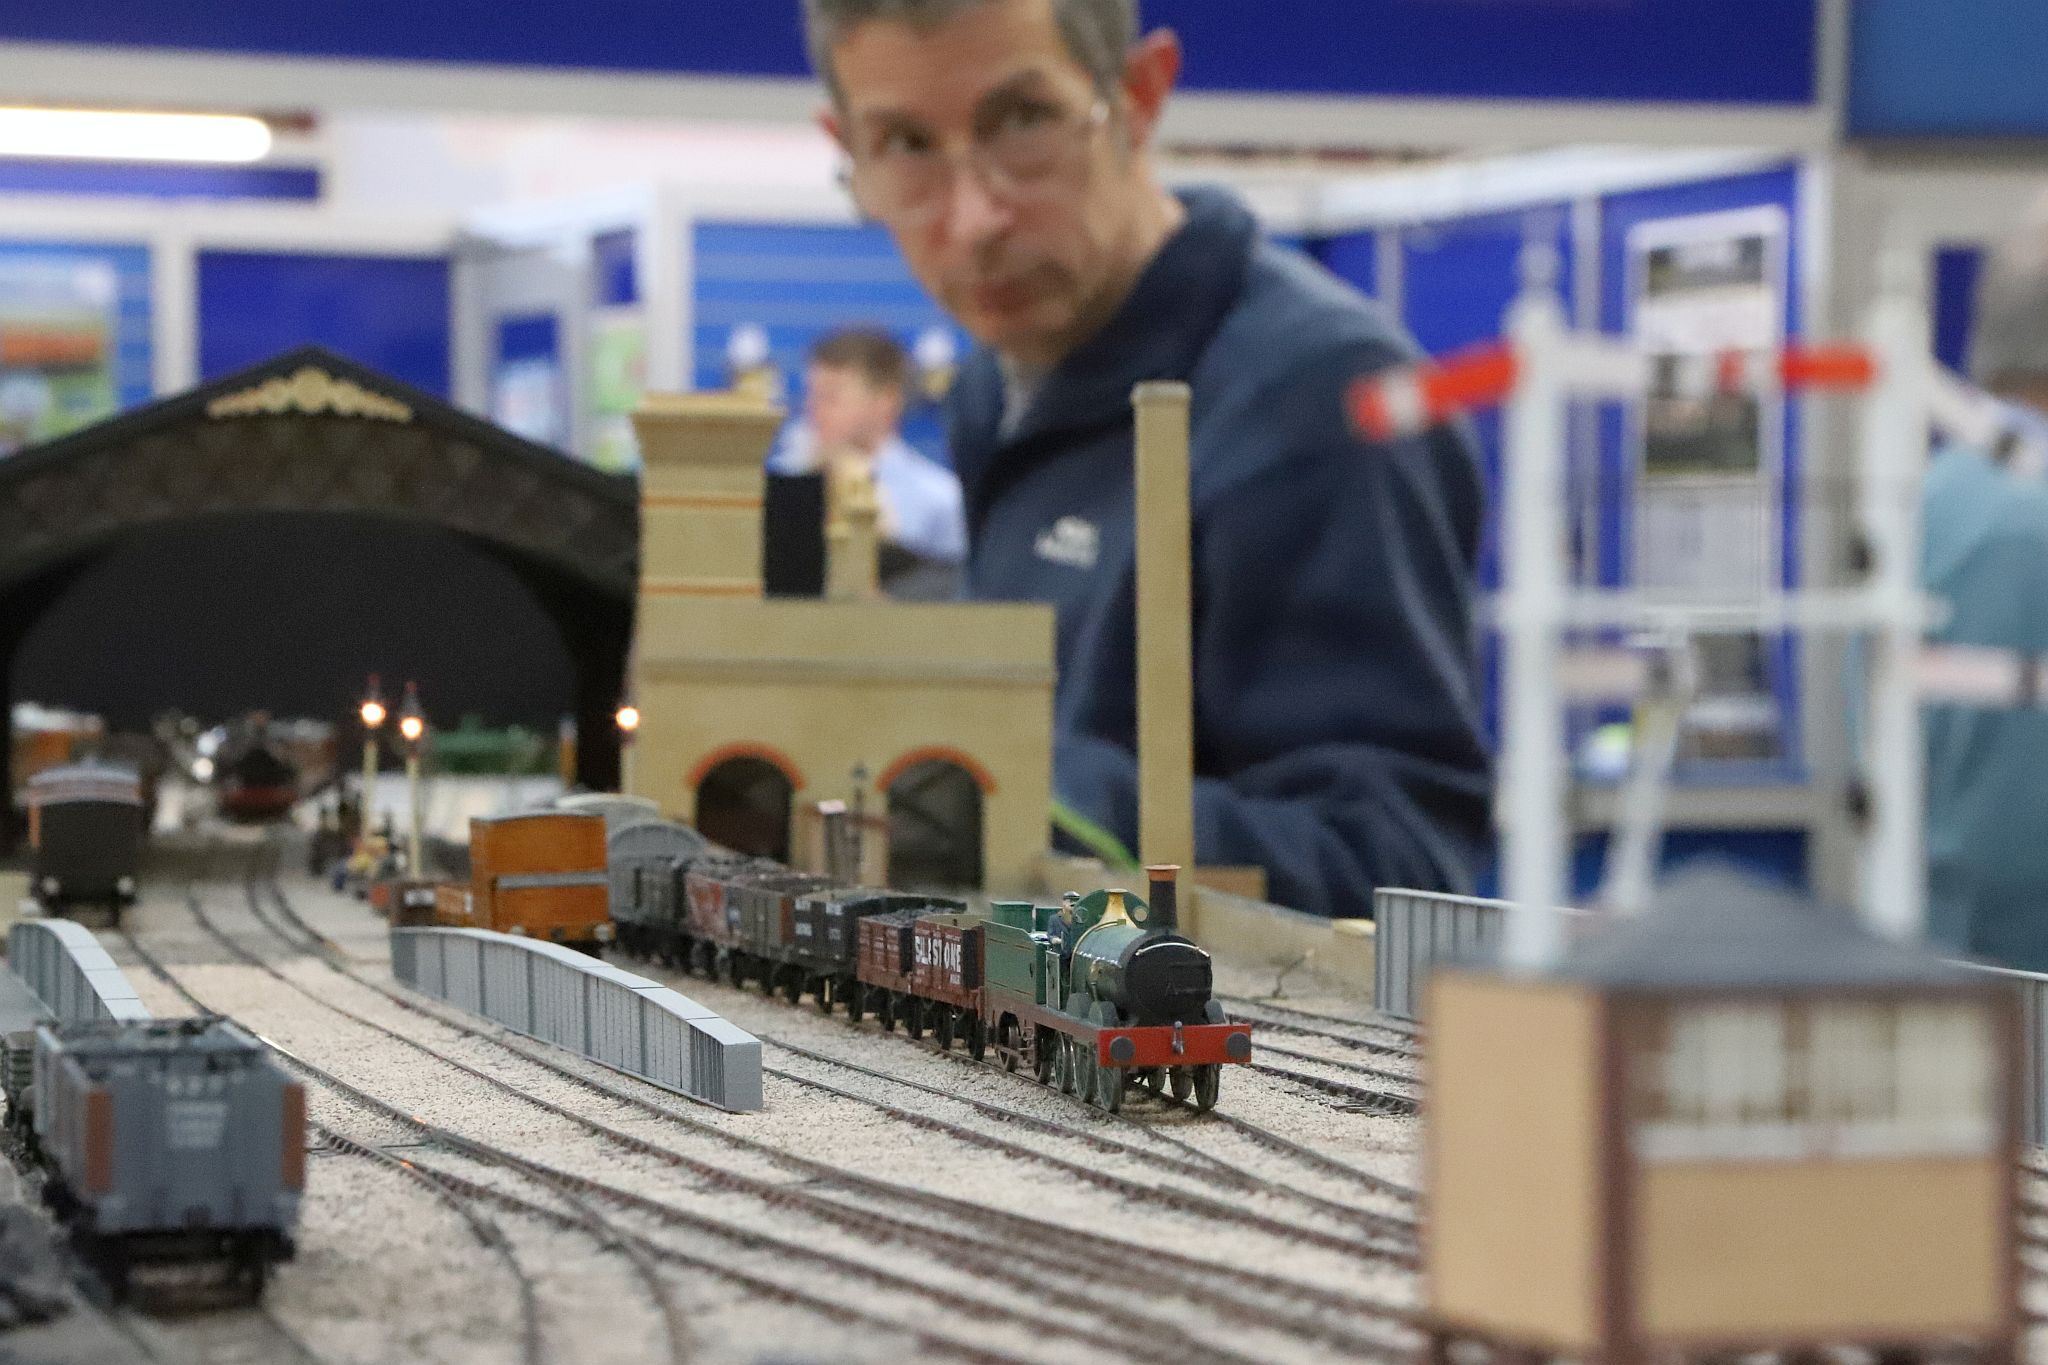 Blackfriars Bridge P4 Gauge model railway layout. 2023 London Festival of Railway Modelling, Alexandra Palace, London